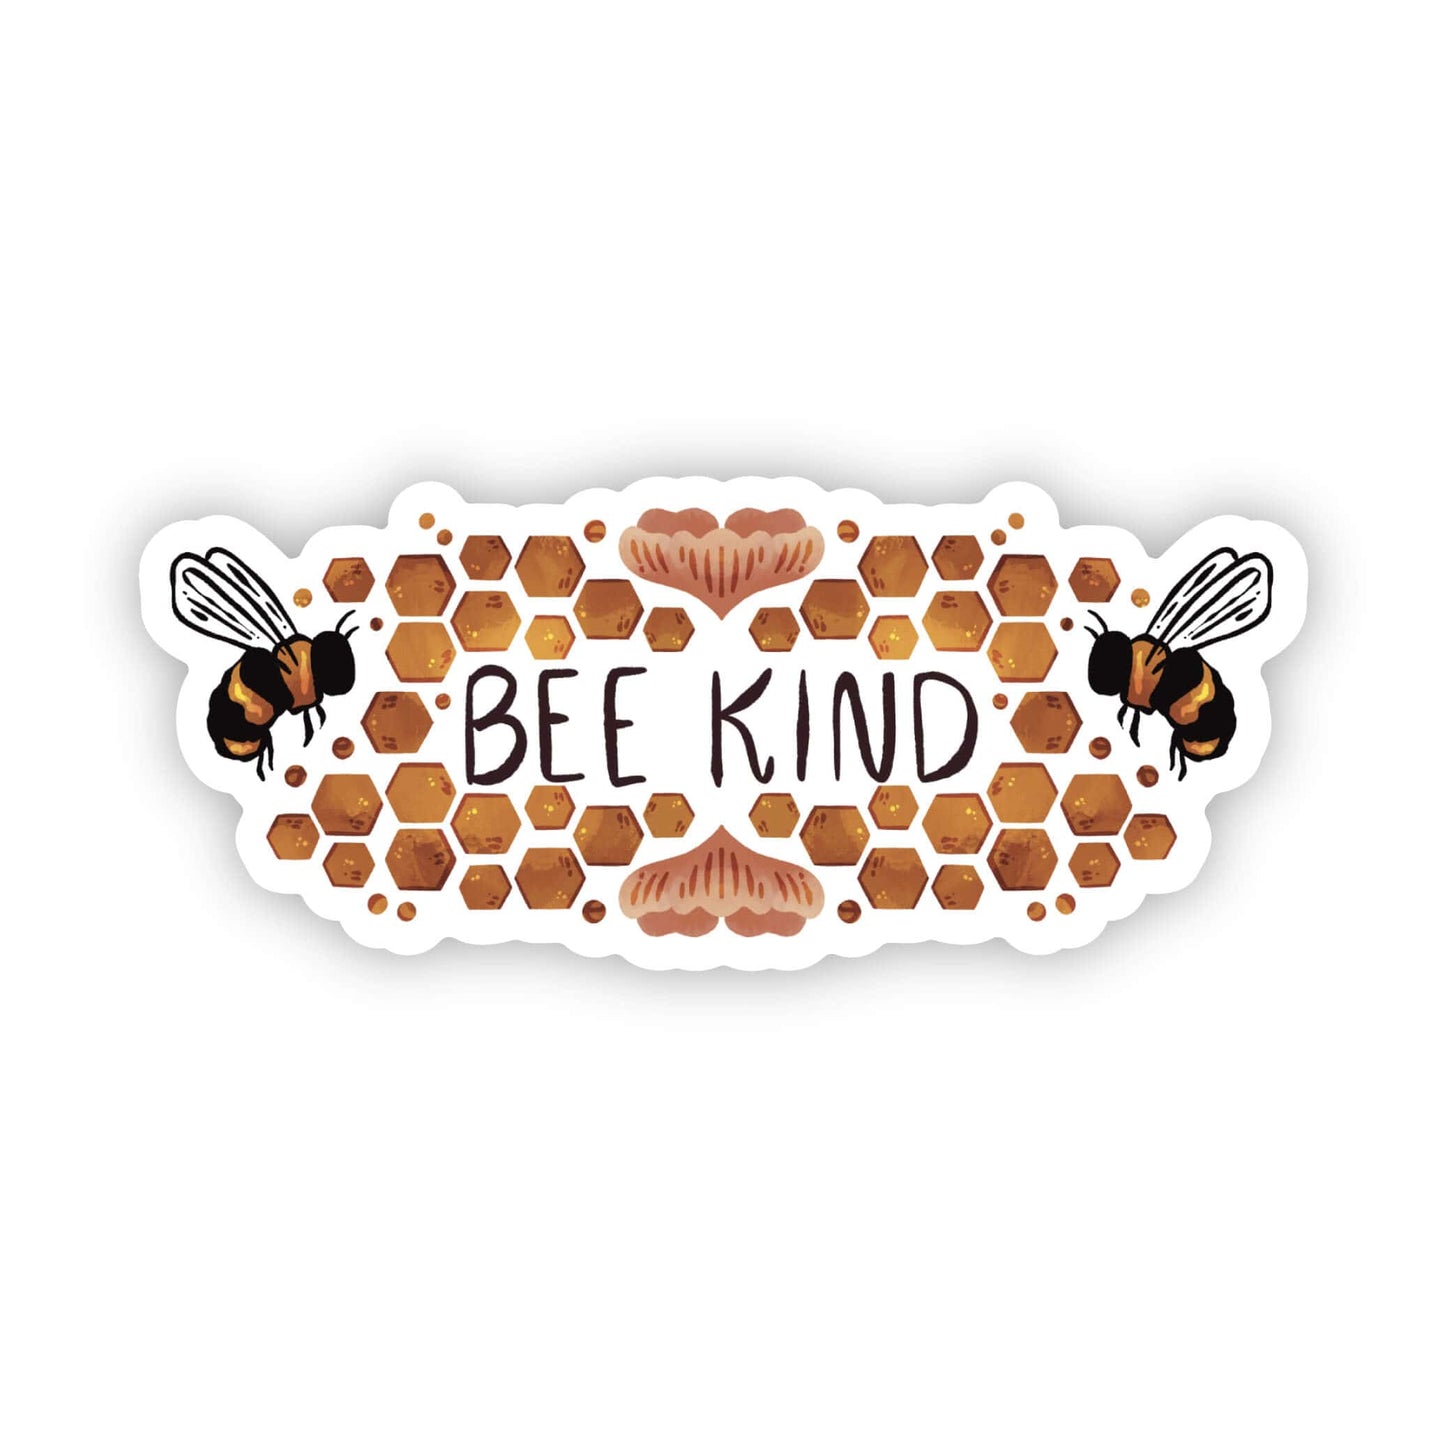 Bee kind nature sticker